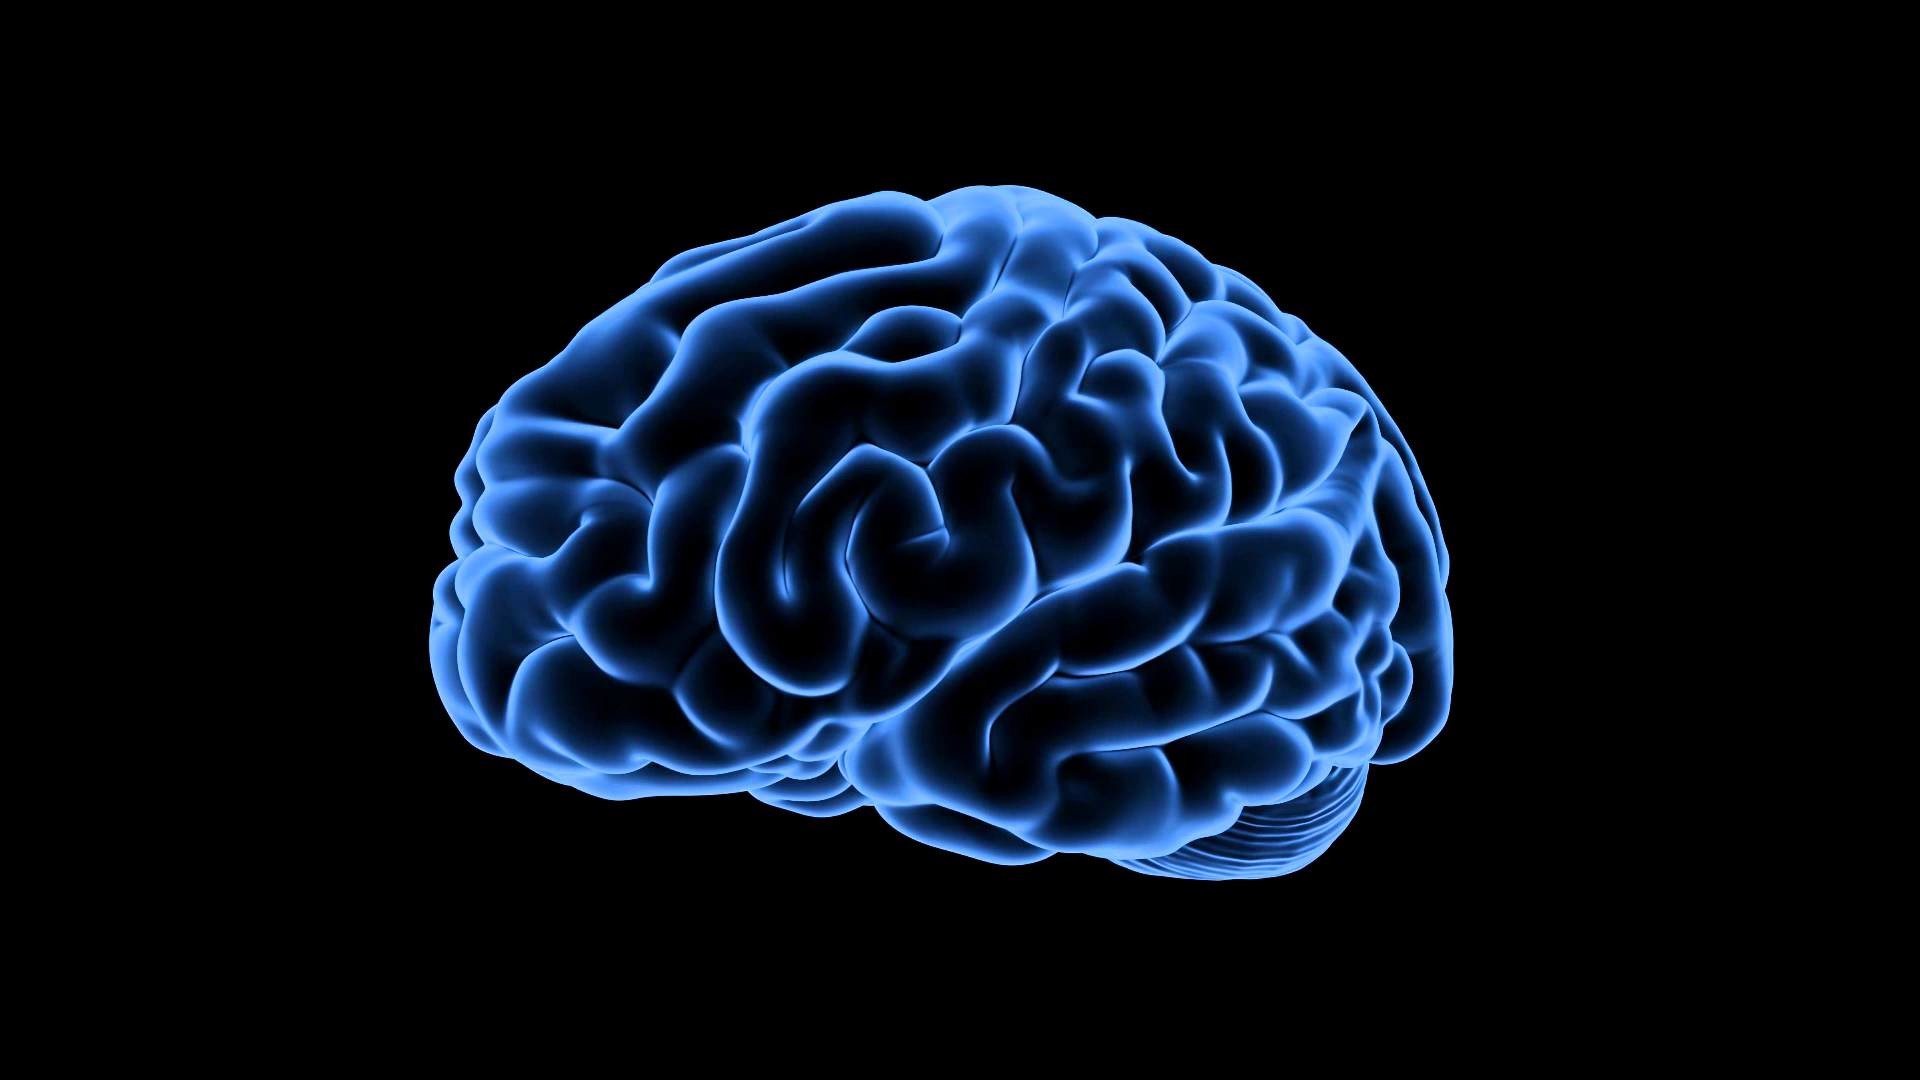 Royalty Free Medical Human Brain HD Footage – Brain ( Blue)360 Degree View  – YouTube